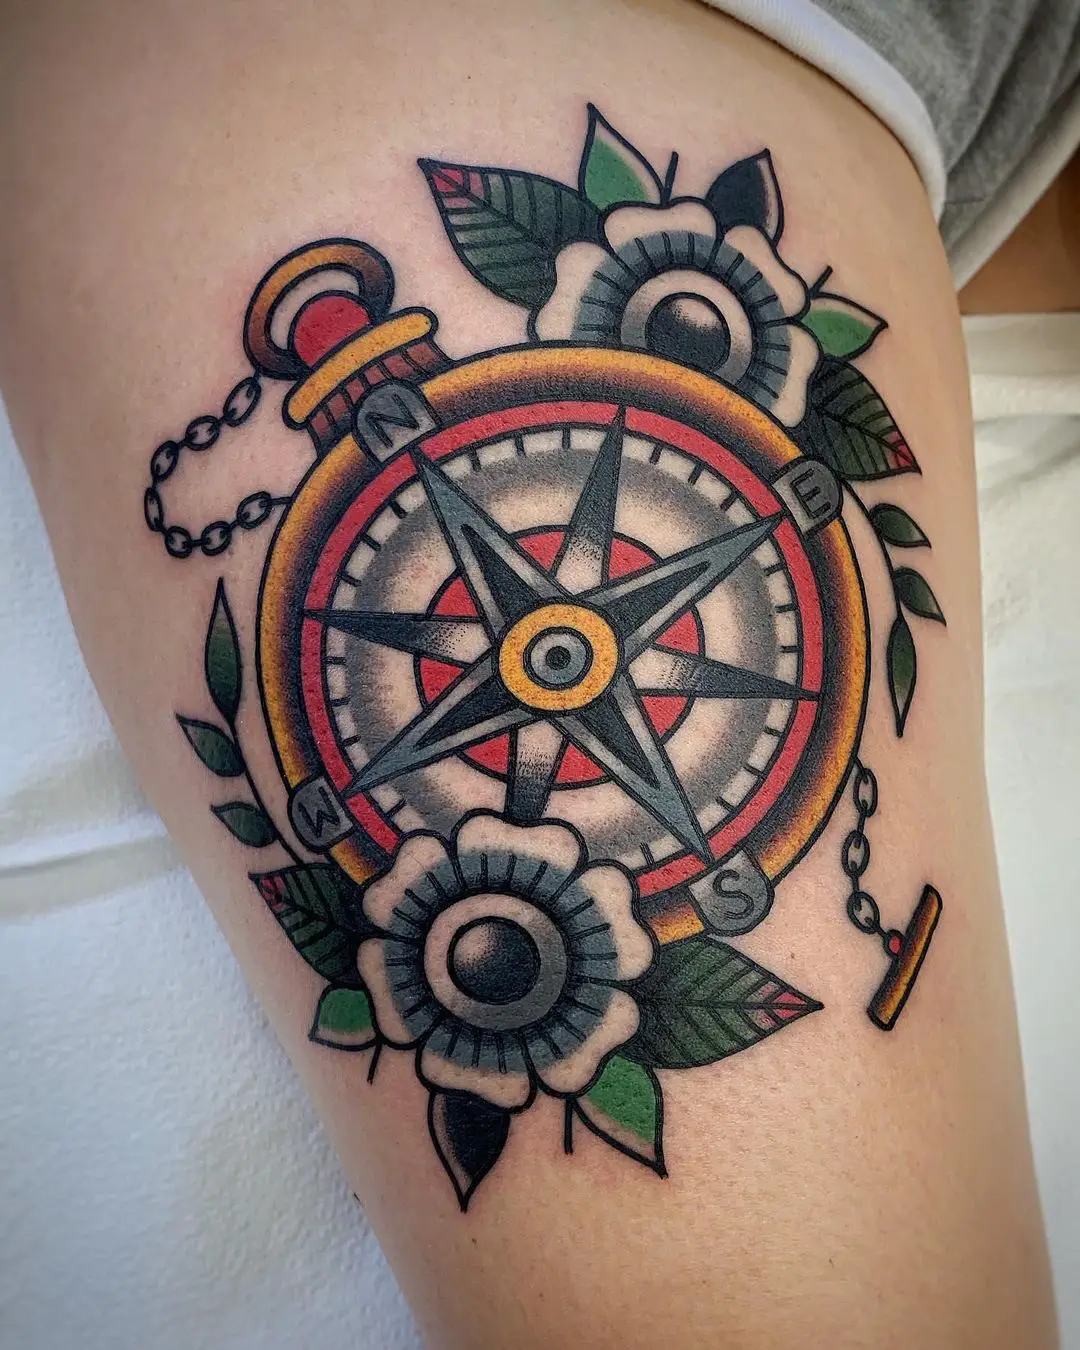 Conpass tattoo by andrewbtattooer